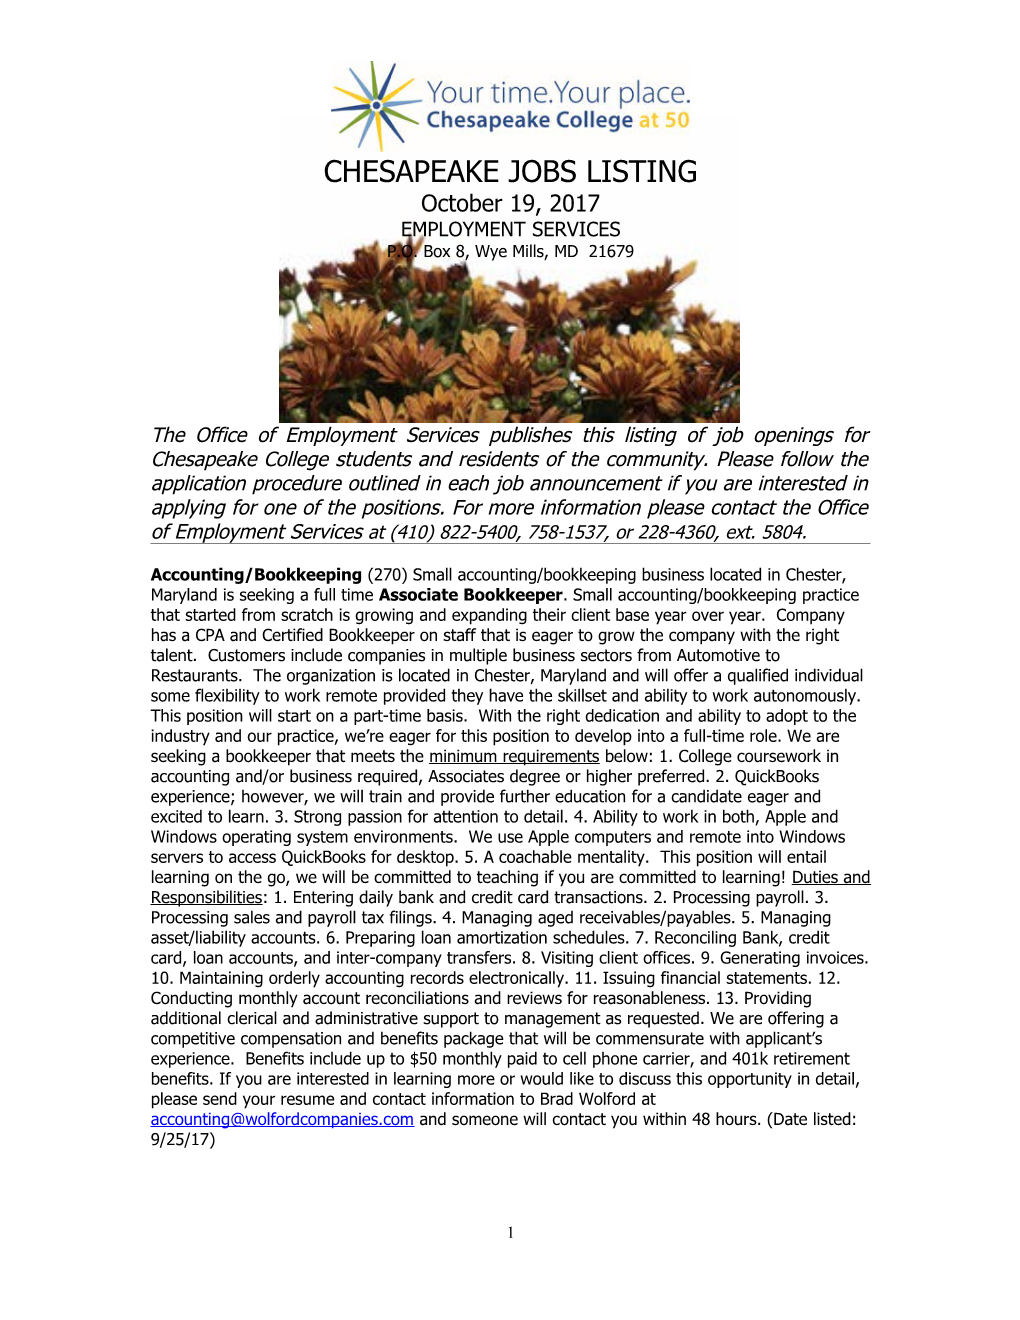 Chesapeake Jobs Listing s1